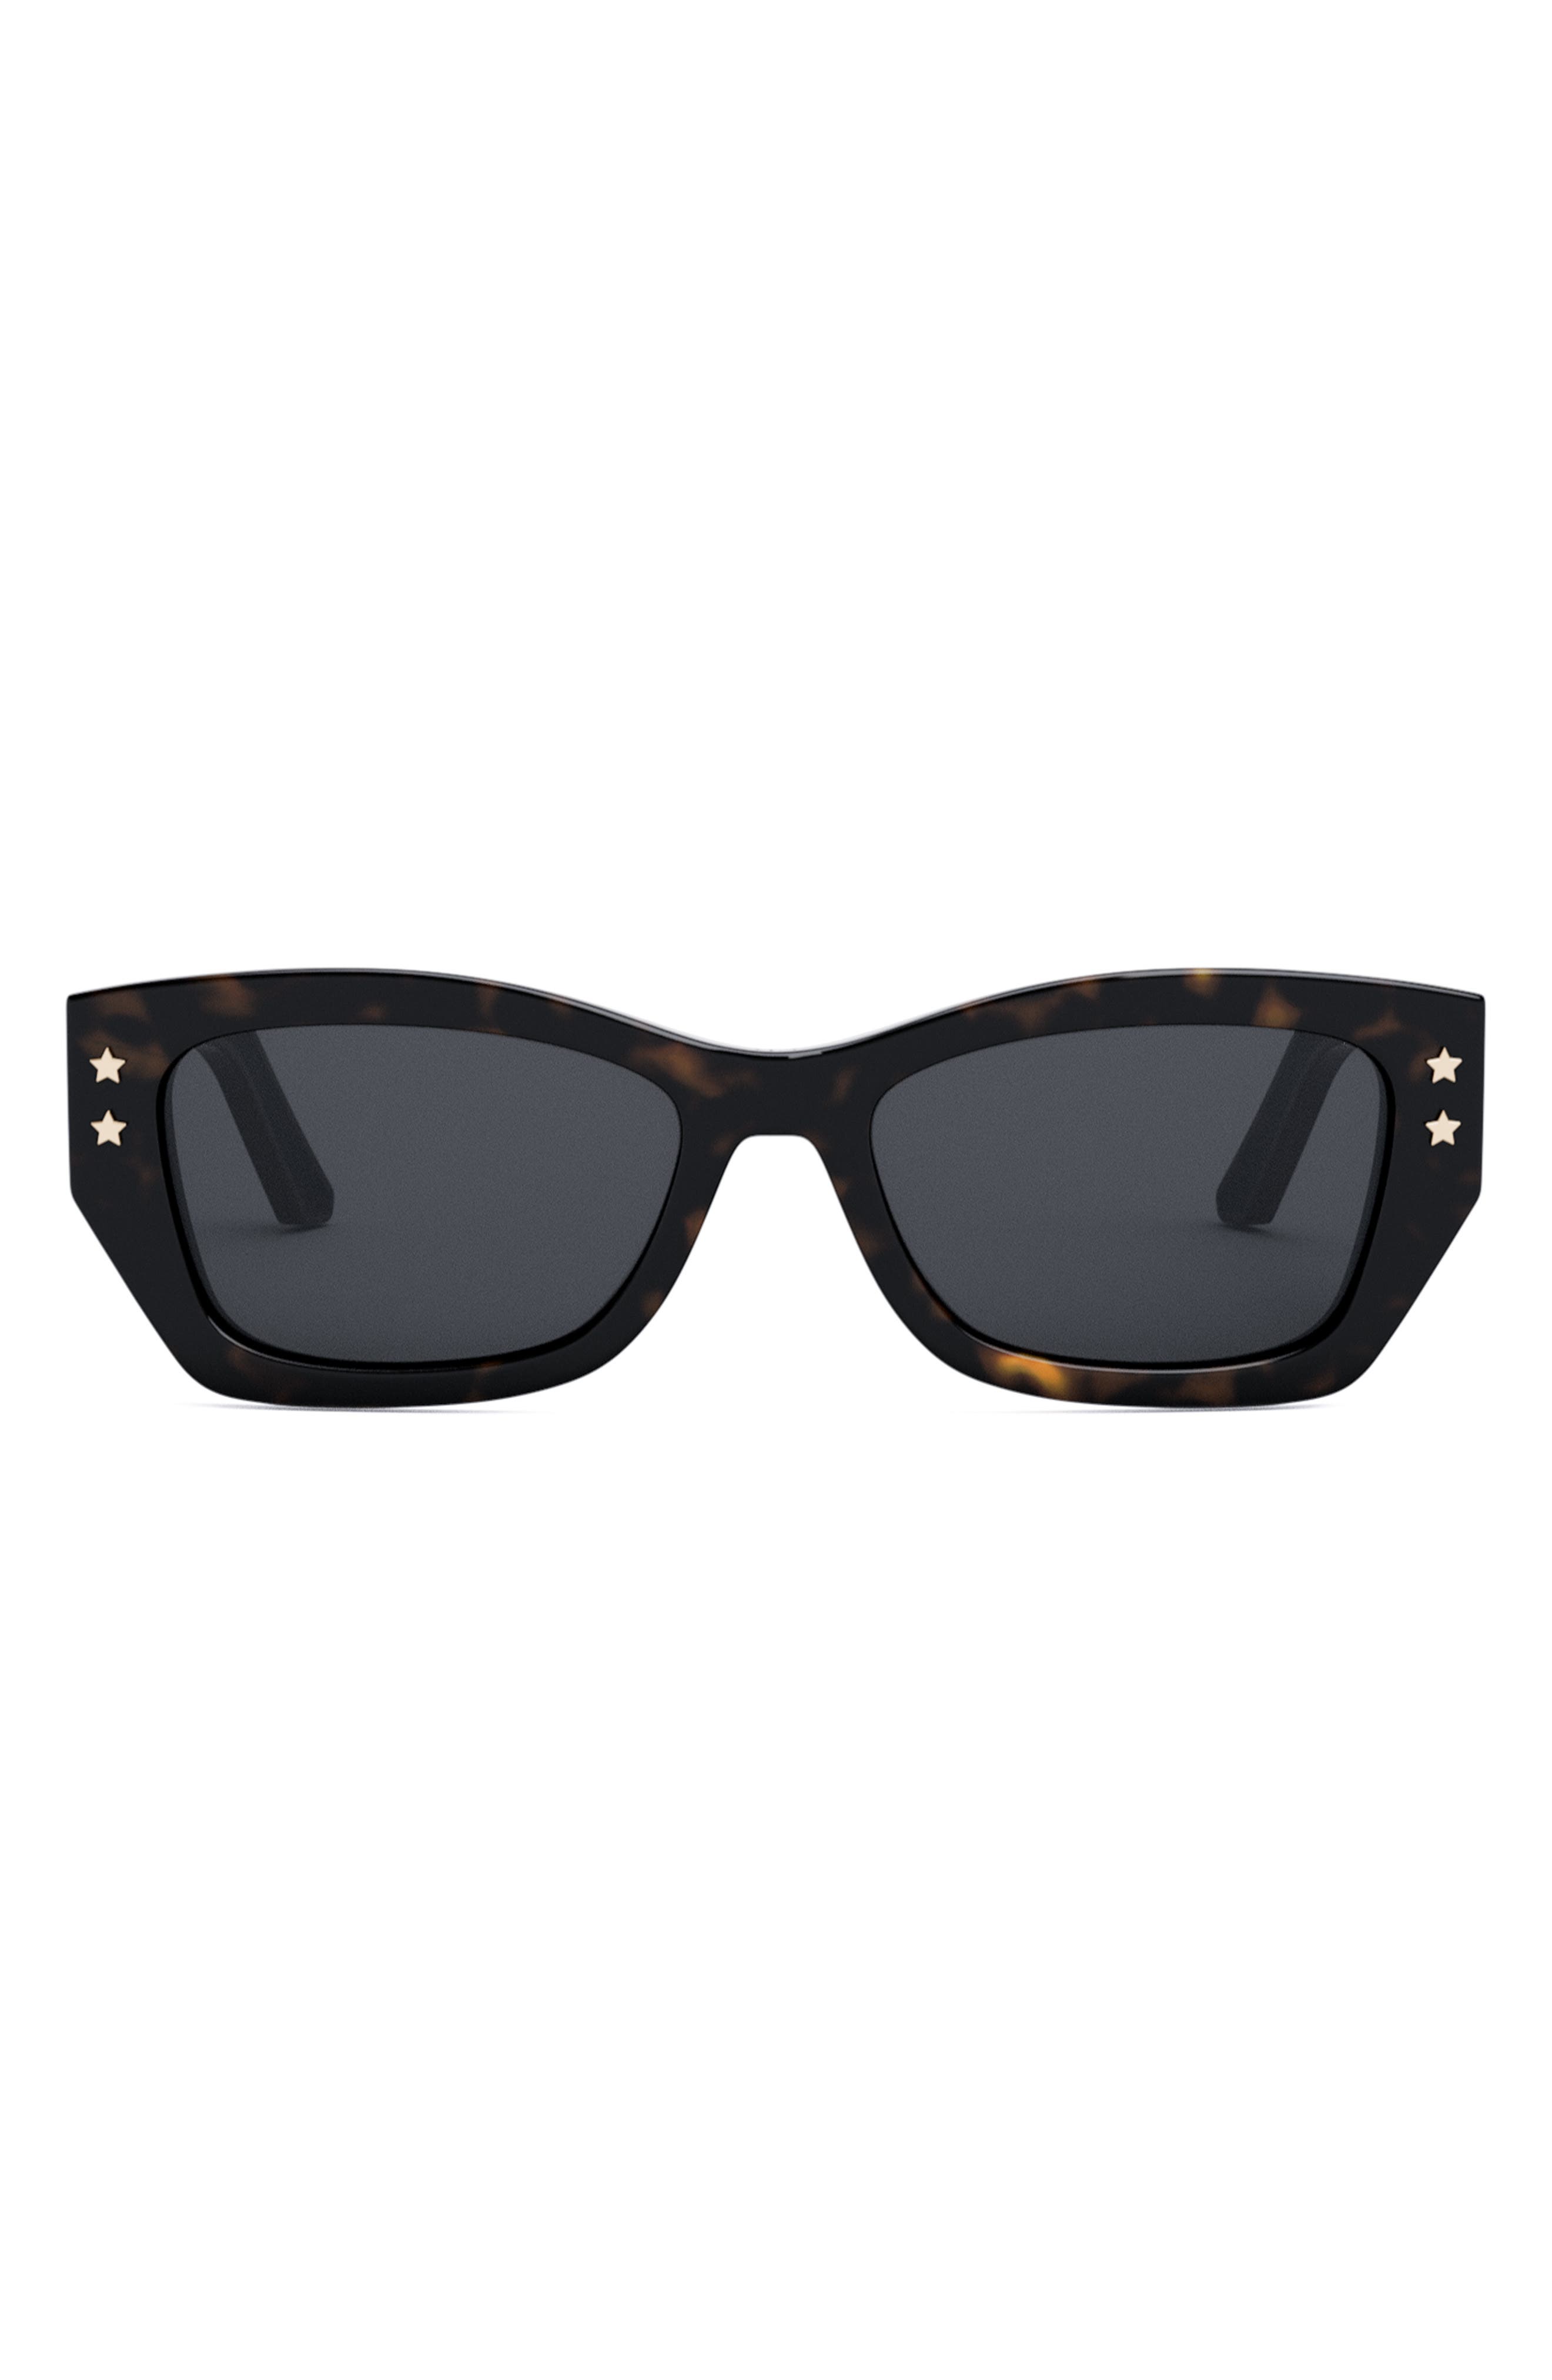 Dior Grey Cat Eye Ladies Sunglasses DIORPACIFIC B1U 10A0 53